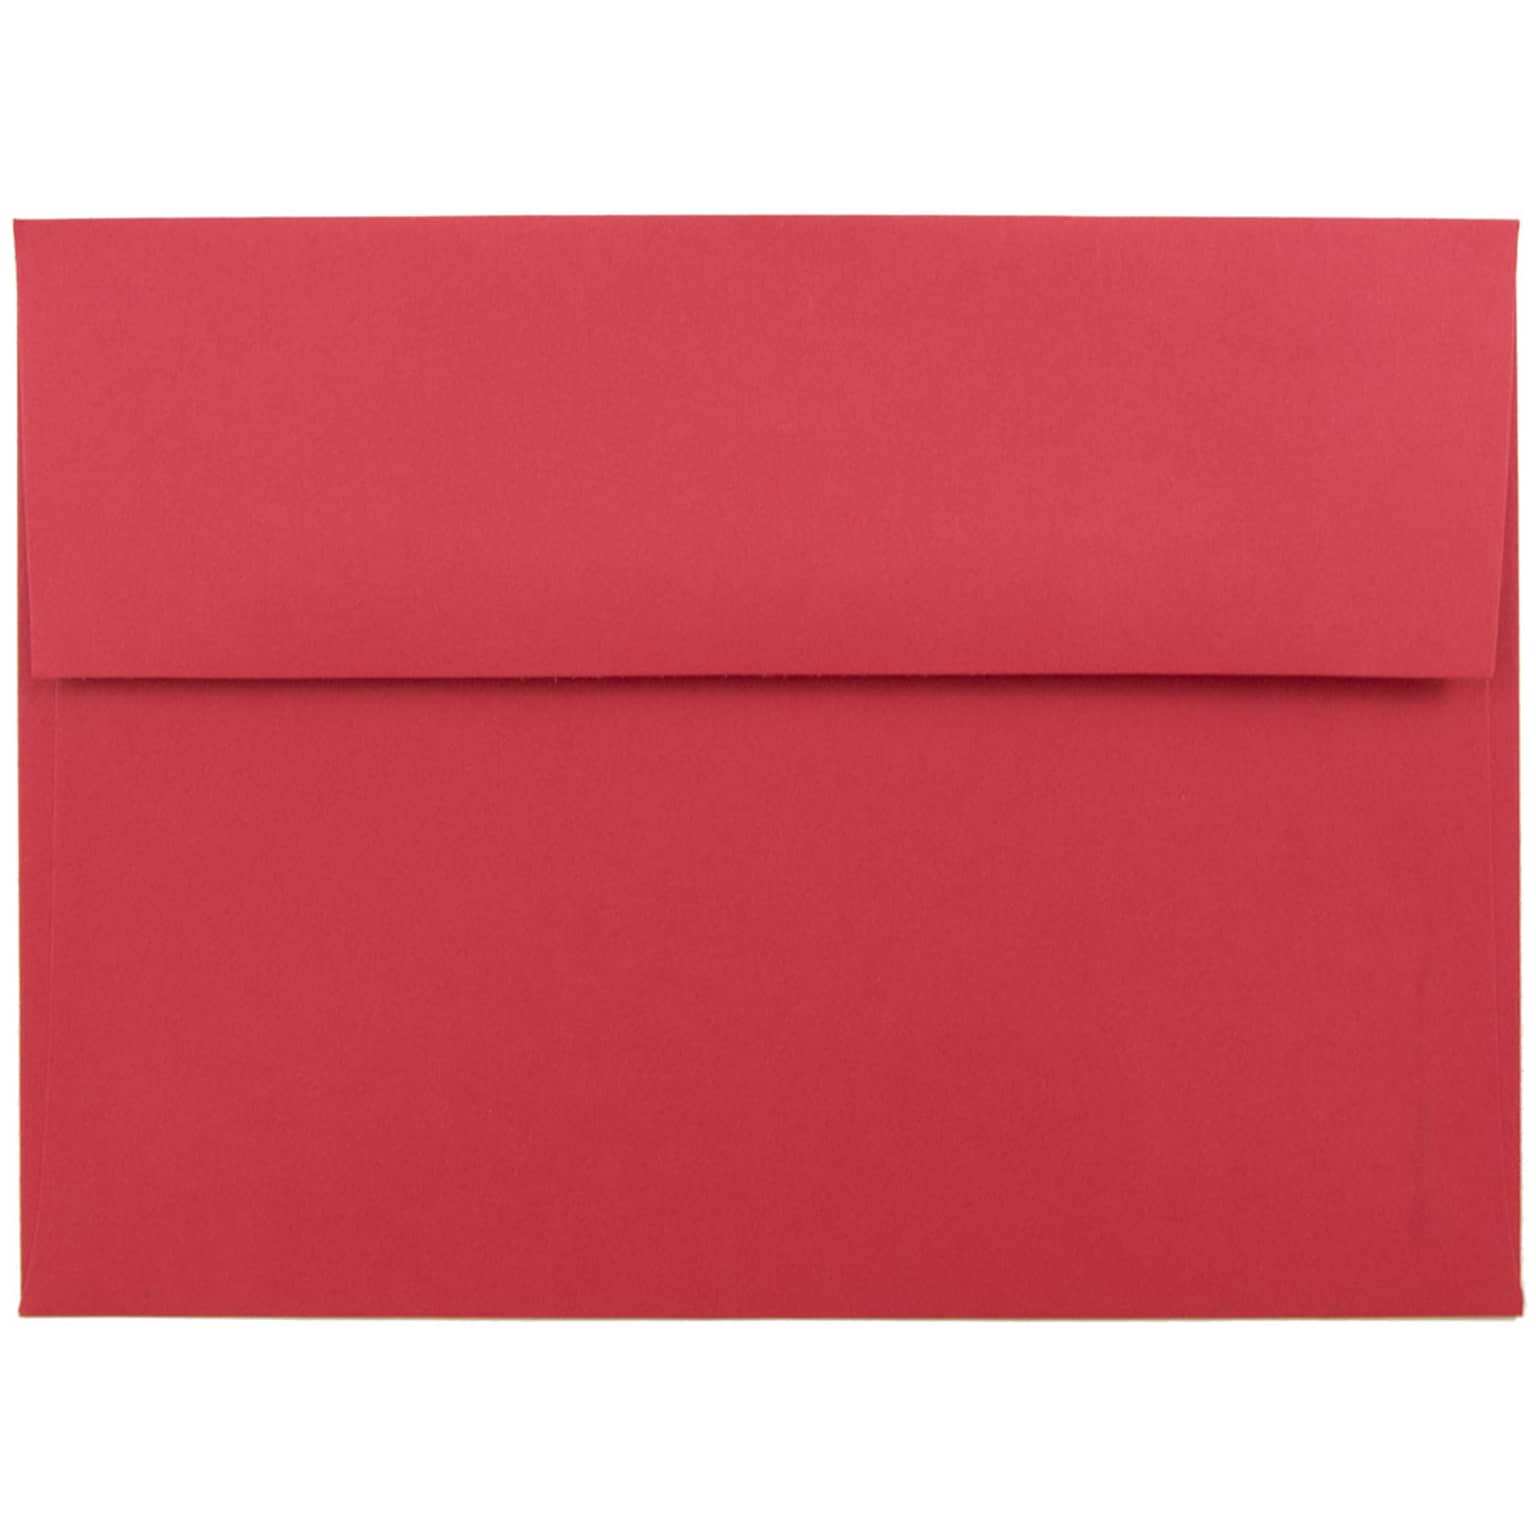 JAM Paper A7 Invitation Envelope, 5 1/4 x 7 1/4, Red, 50/Pack (15945I)